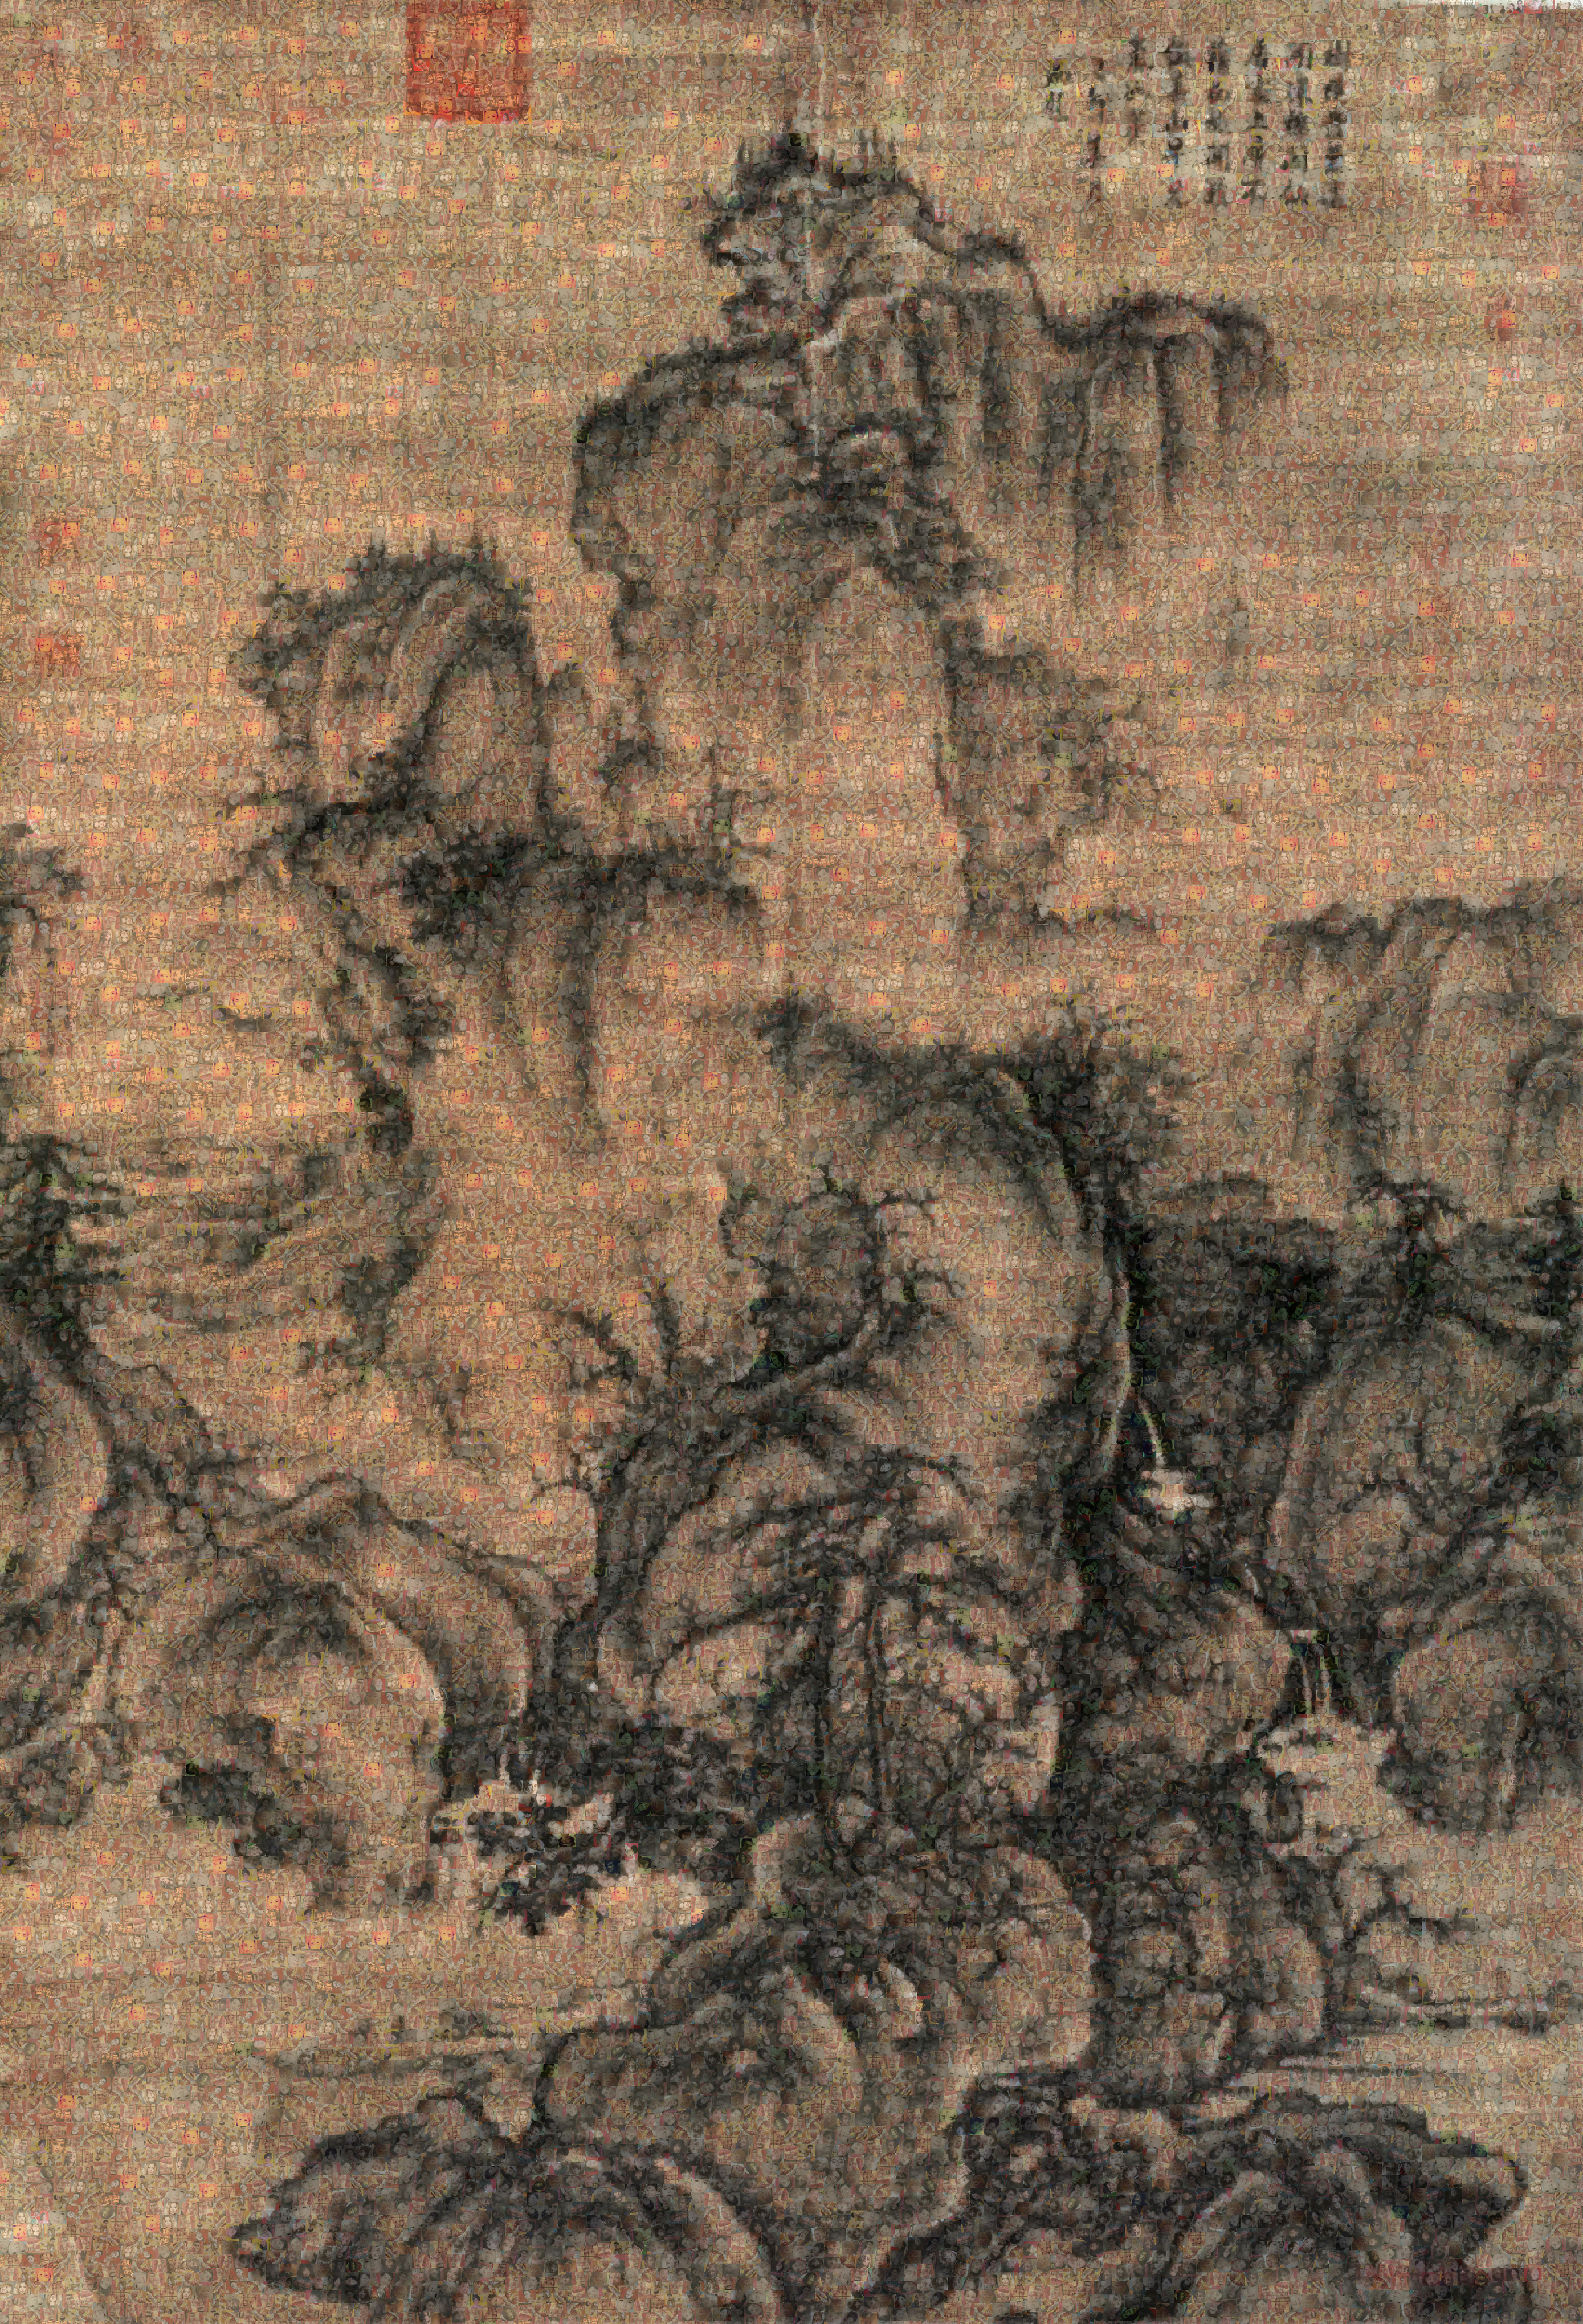 2015.502 Guo Jian, Untitled – Early Spring, 2012, inkjet pigment print, 180 x 122 cm